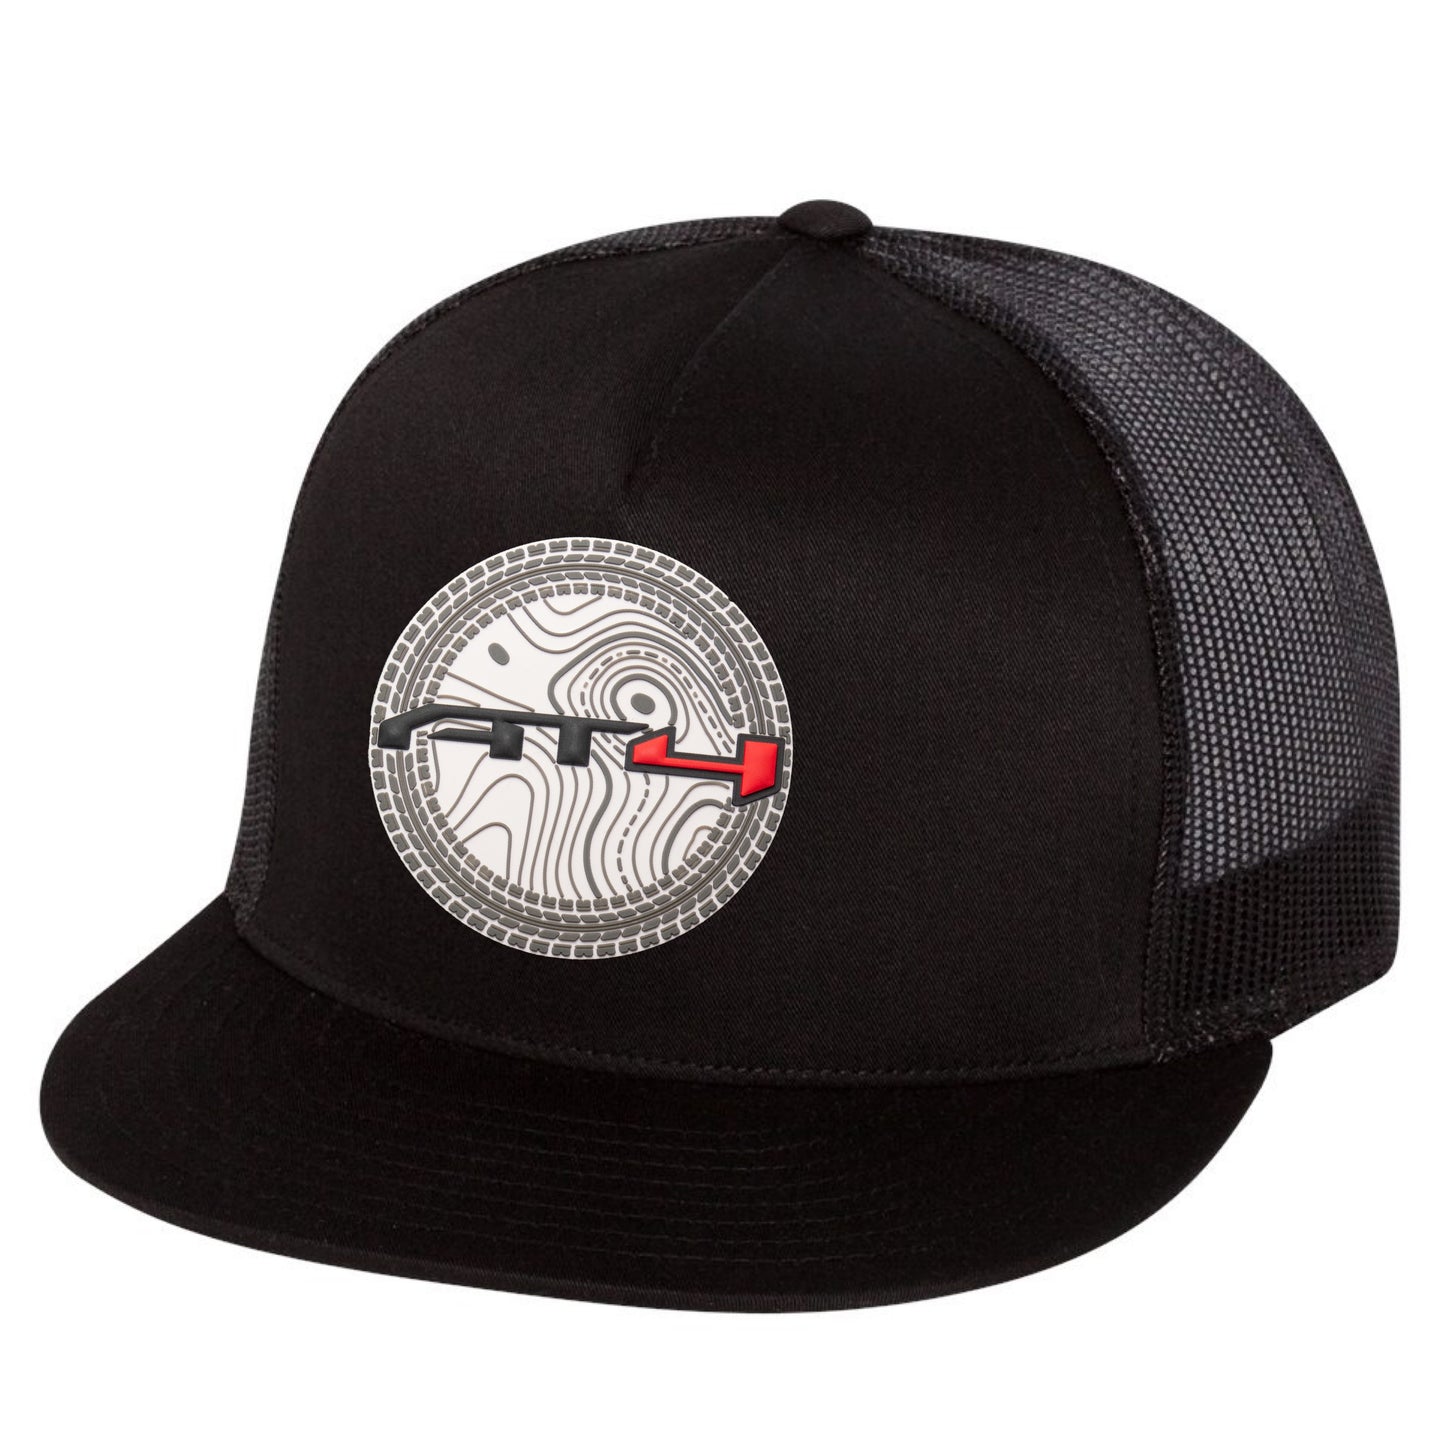 AT4 3D YP Snapback Flat Bill Trucker Hat- Black - Ten Gallon Hat Co.